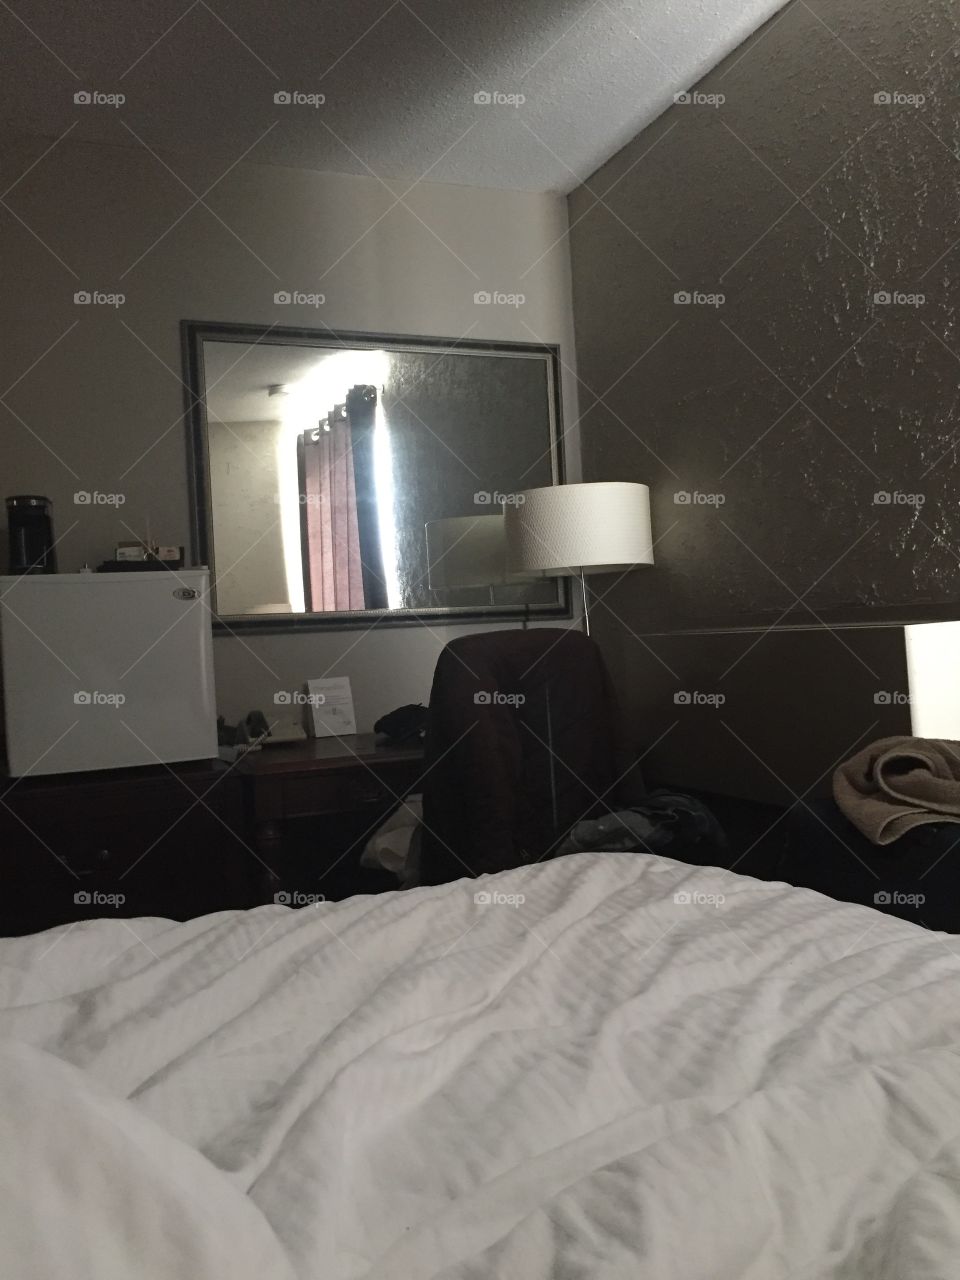 Inside a Motel